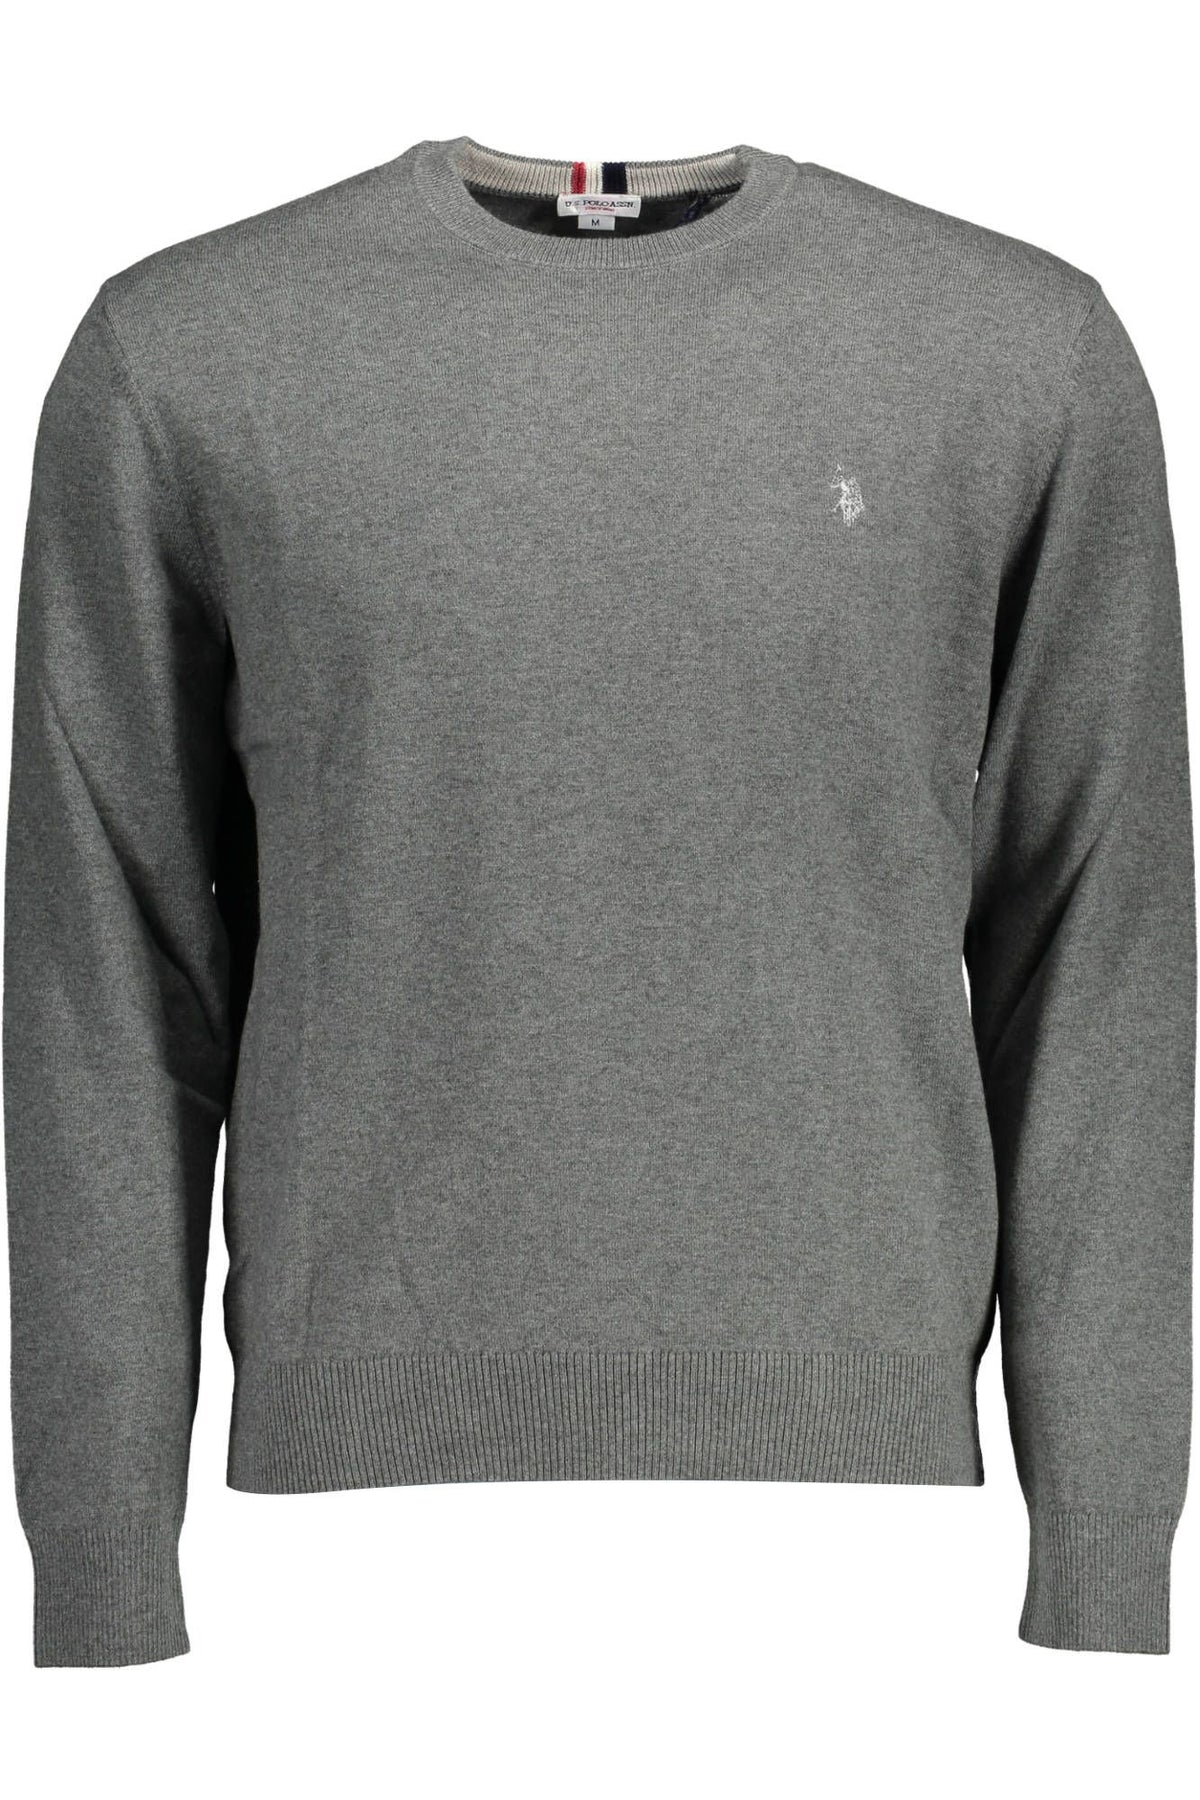 U.S. POLO ASSN. Classic Round Neck Logo Sweater